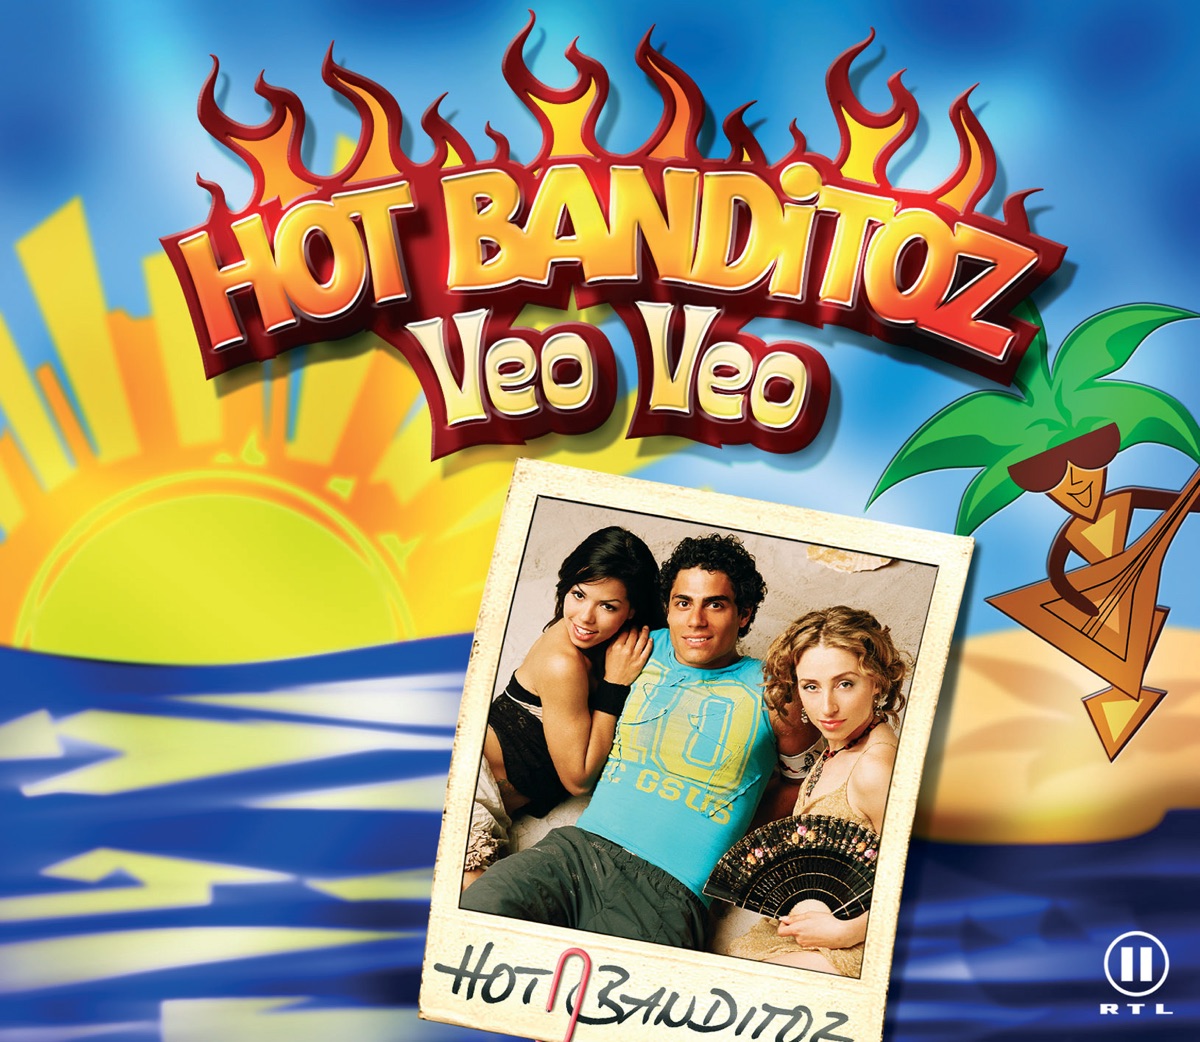 Hot Banditoz Veo veo cover artwork